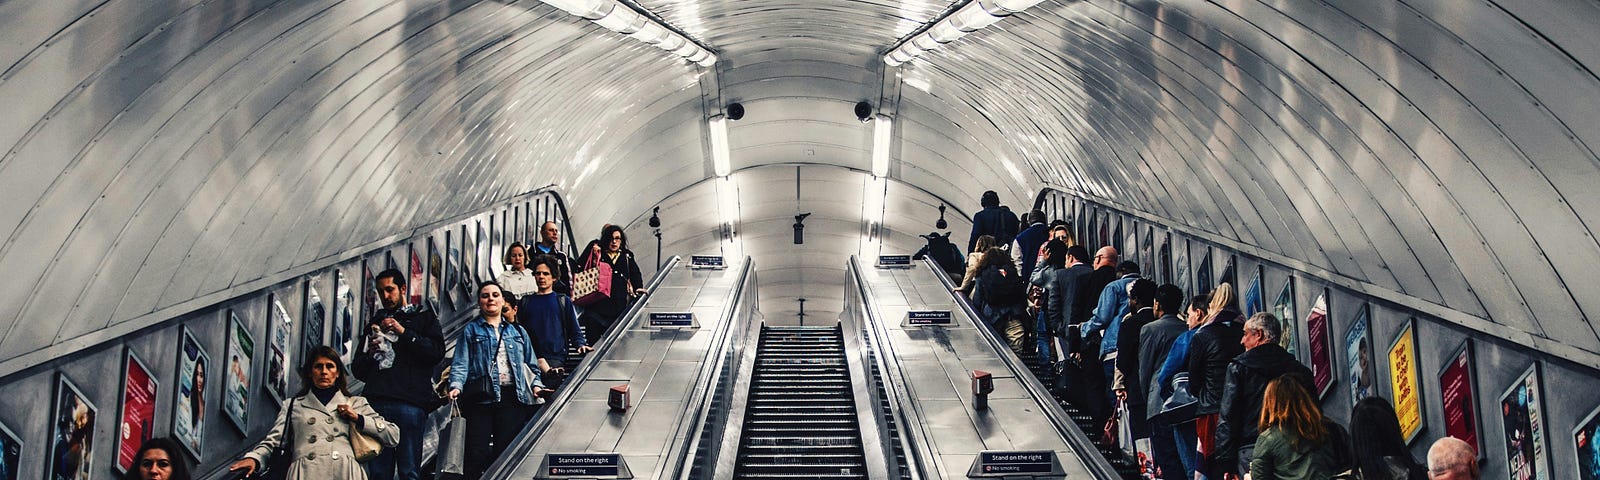 Escalators at a London Underground station